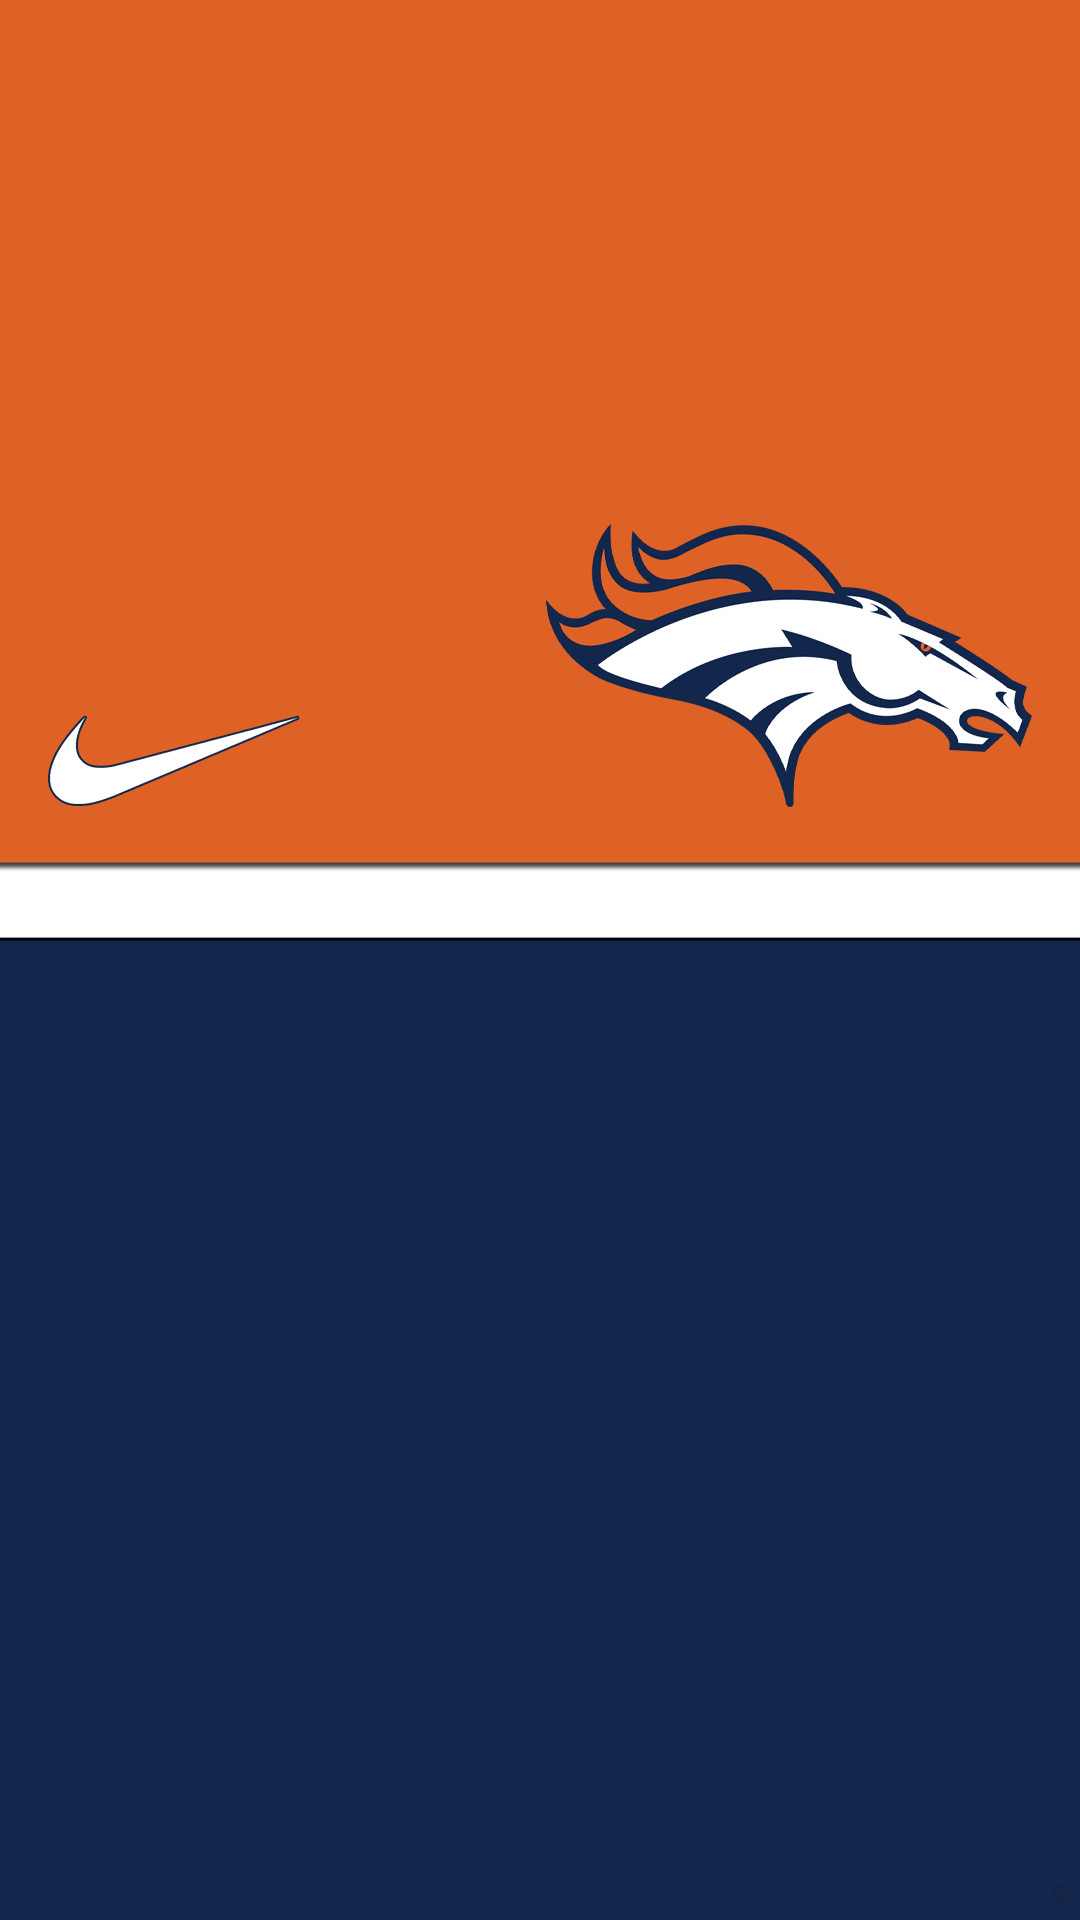 1080x1920 Denver Broncos Wallpaper, Football Wallpaper, Denver Broncos Memes, Nike  Images, Green Bay